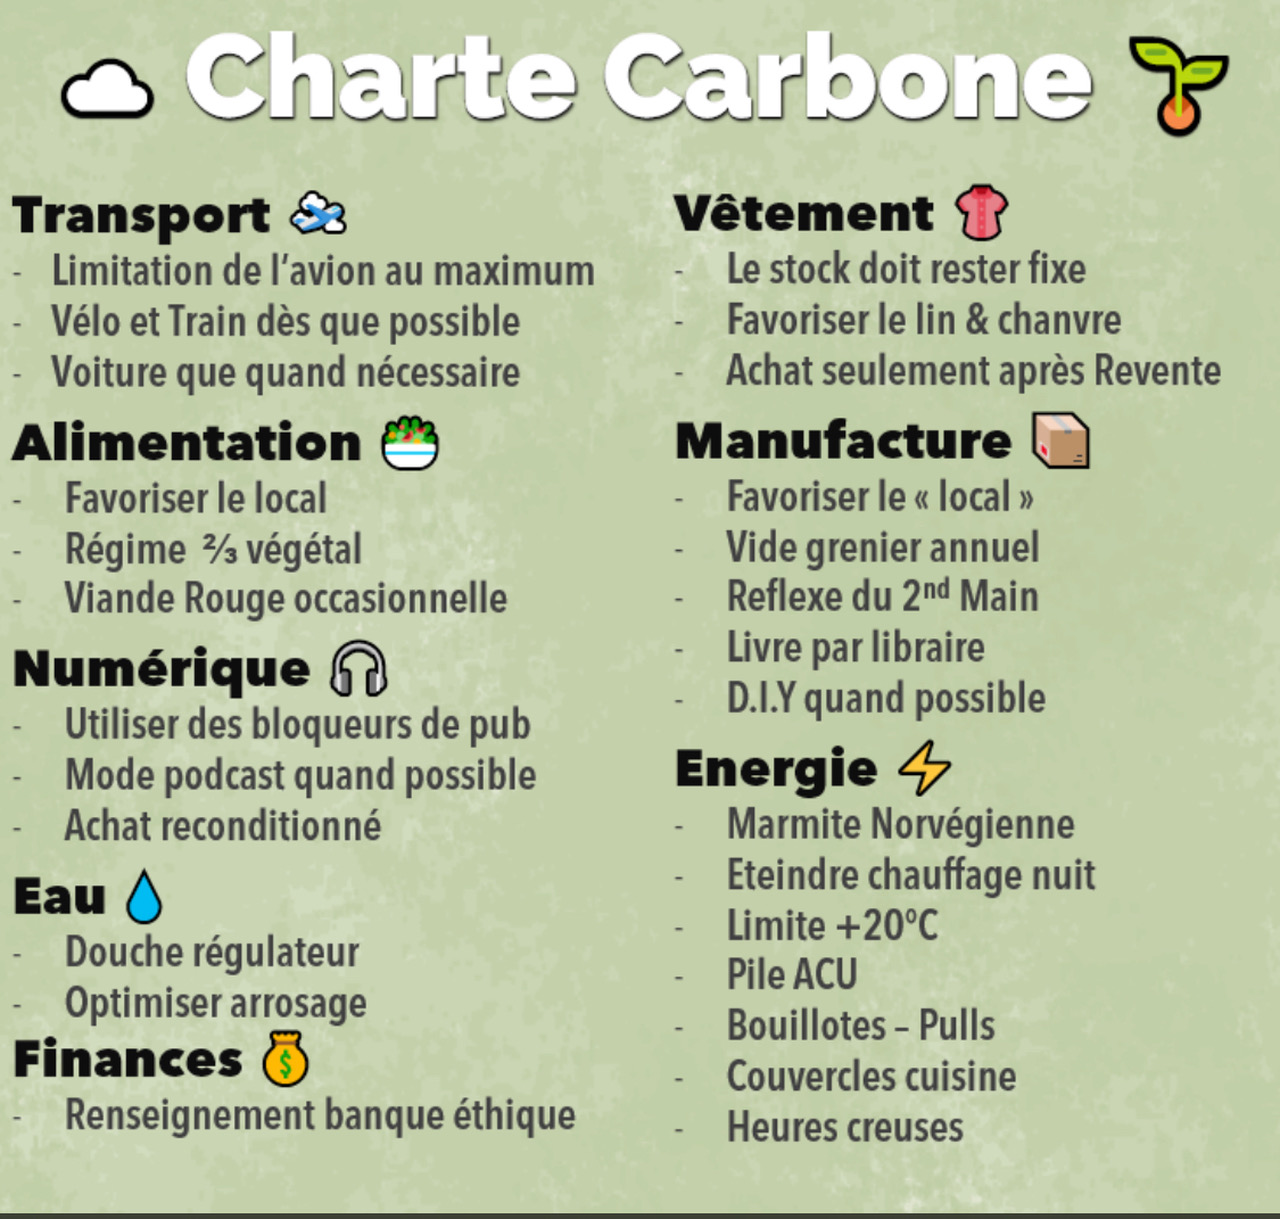 Charte Carbone